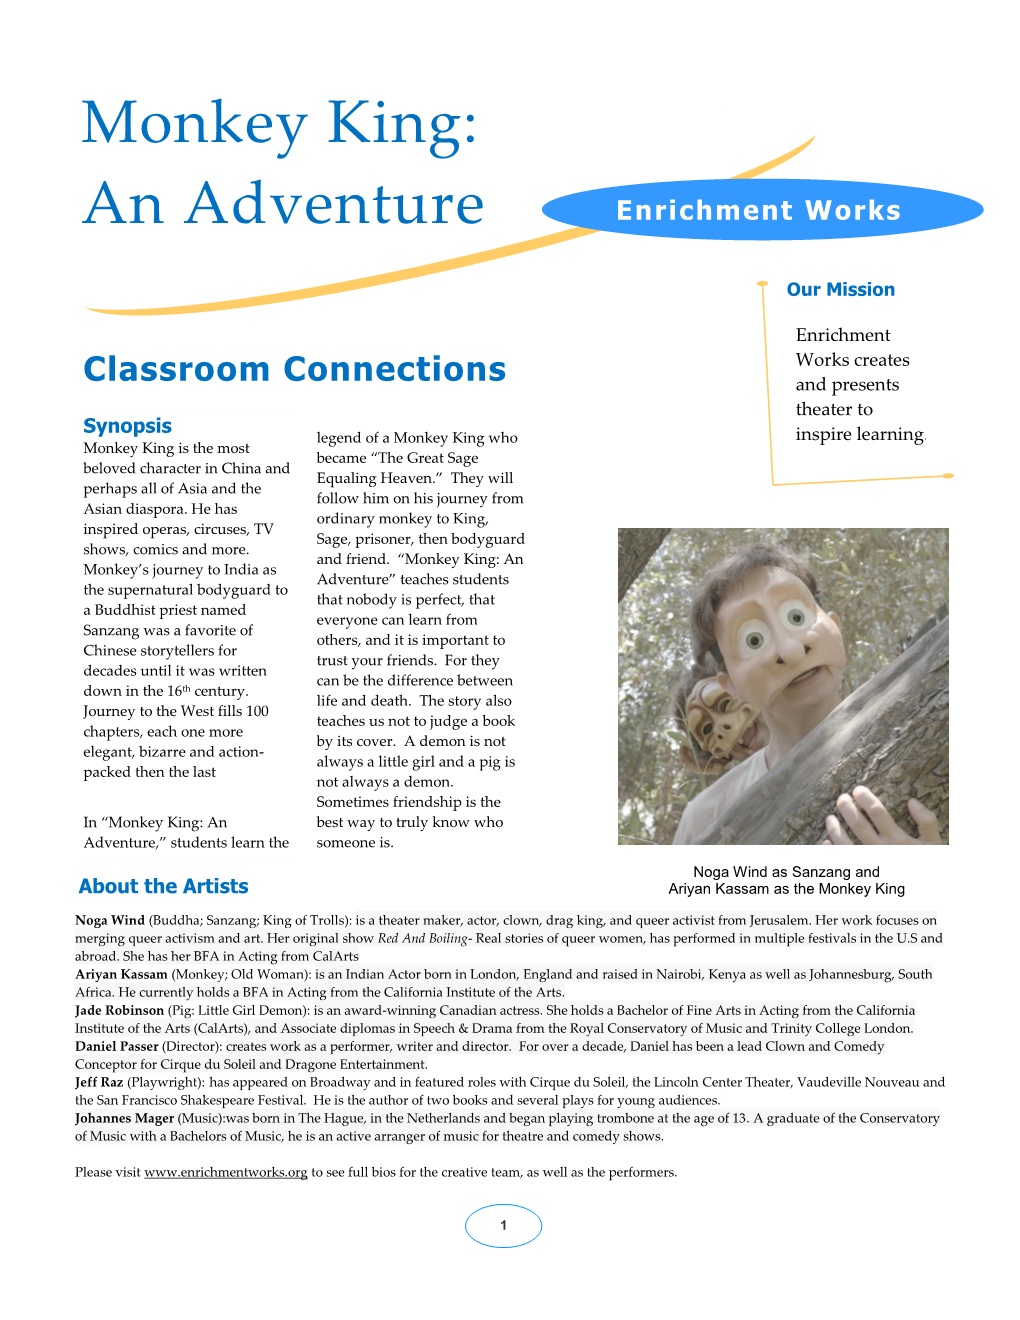 Monkey King: an Adventure Enrichment Works